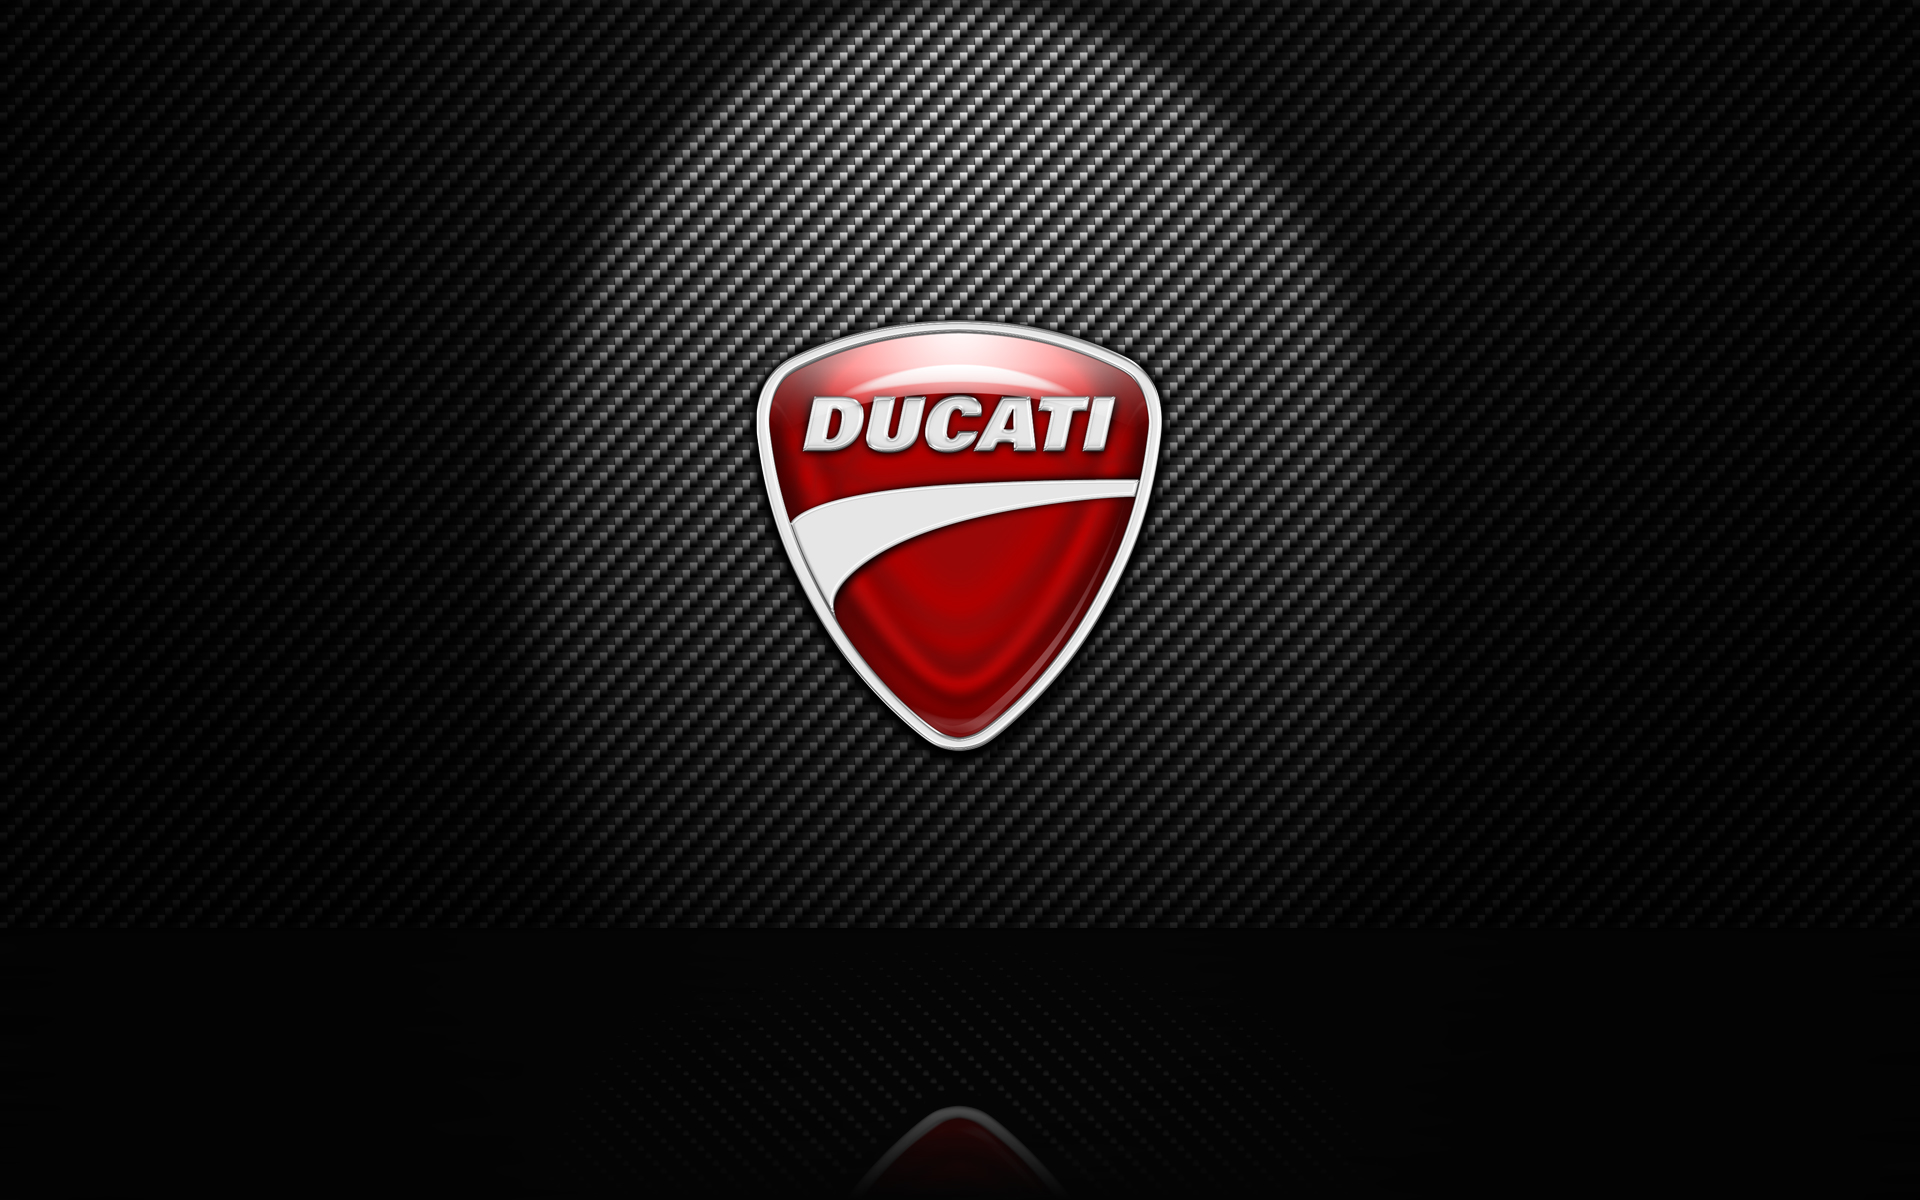 Ducati Logo Wallpaper Wallpapersafari HD Wallpapers Download Free Images Wallpaper [wallpaper981.blogspot.com]